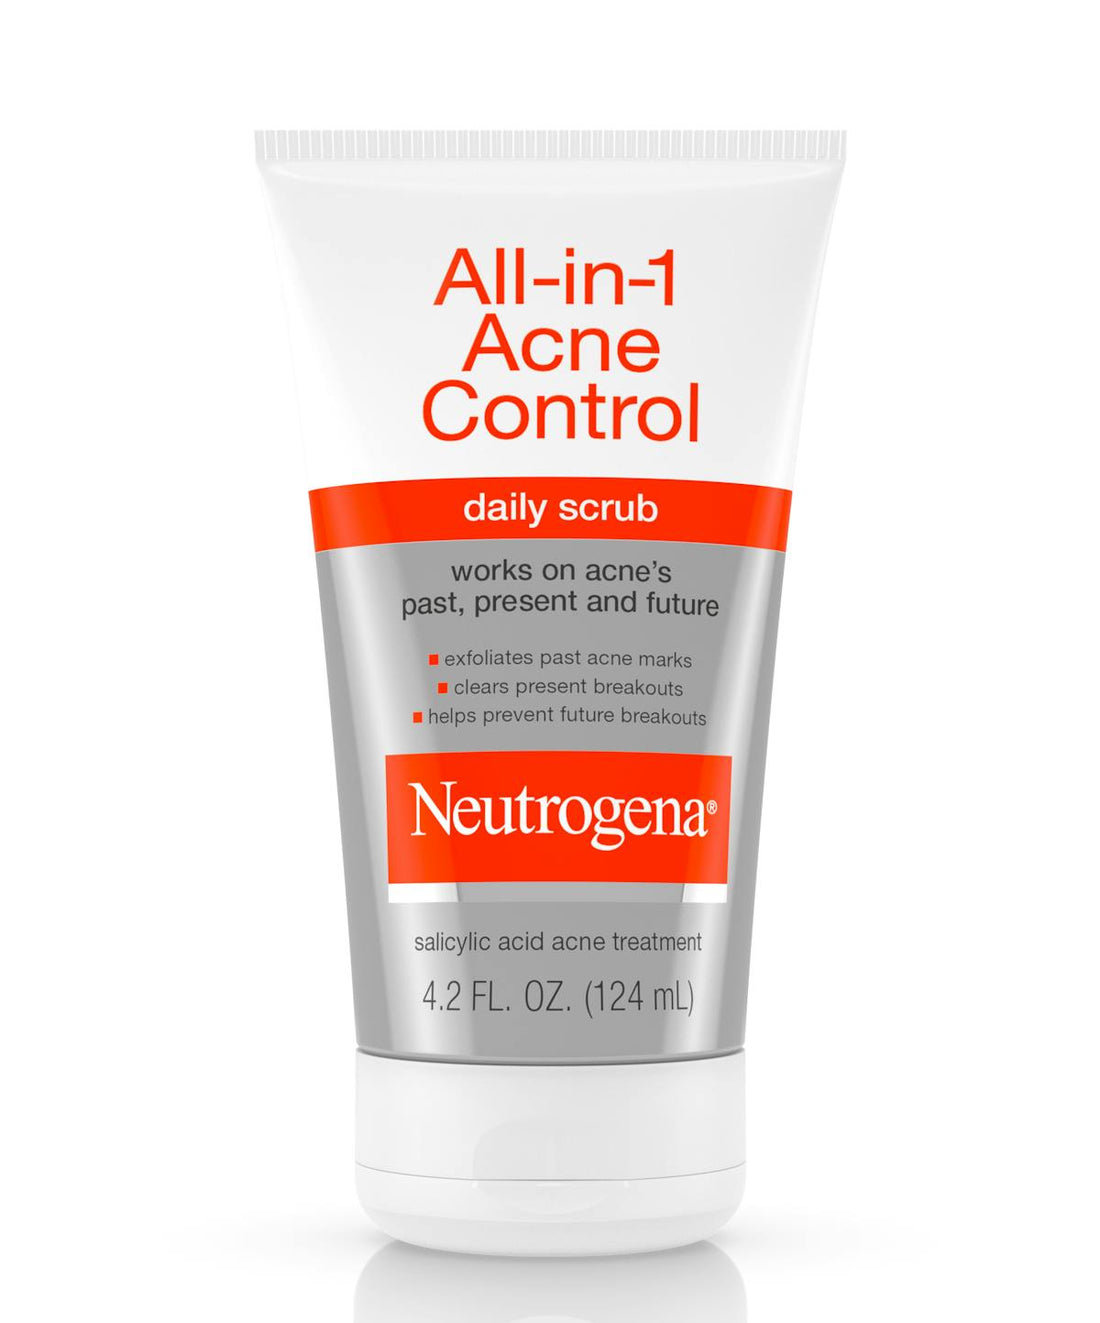 All - in-1 Acne Control Daily Scrub (124ml) - Neutrogena.